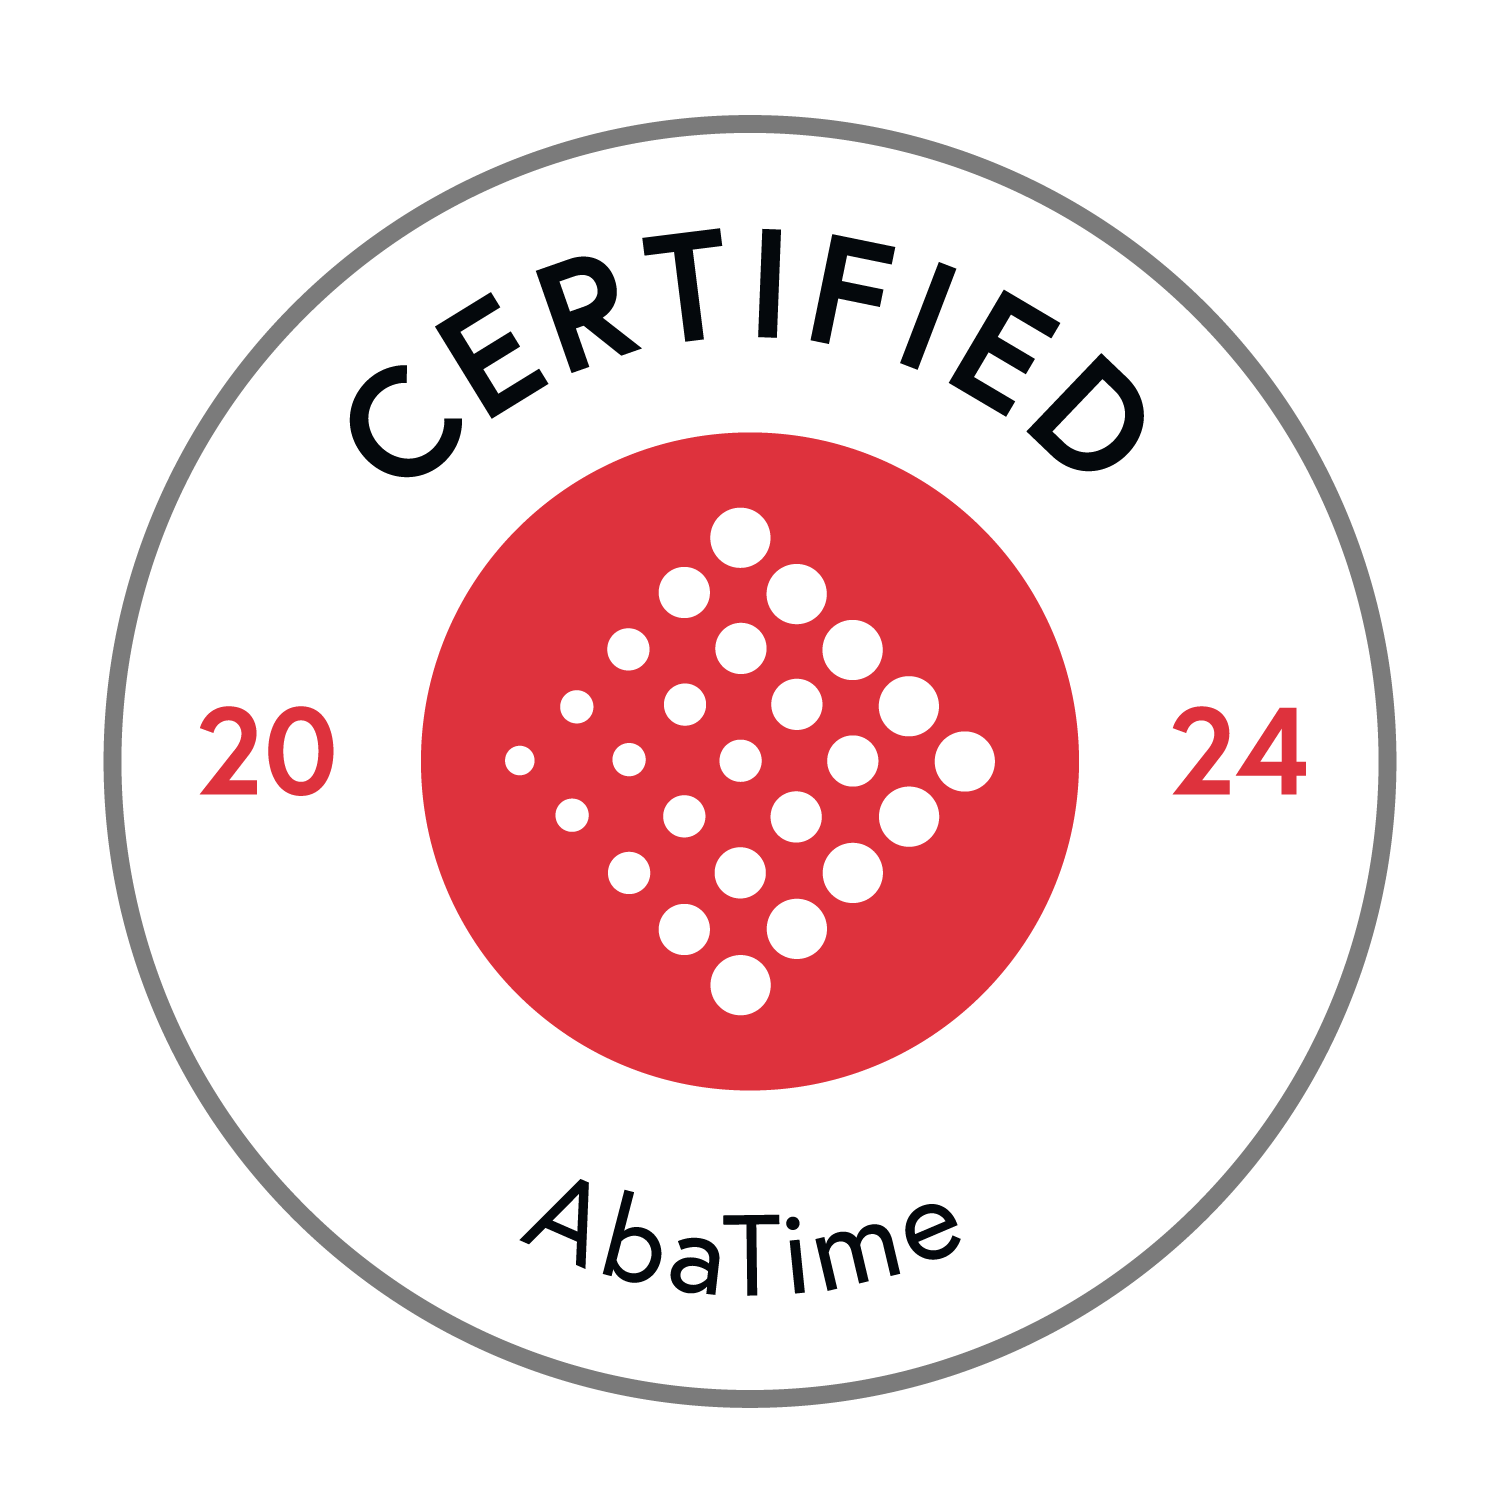 AbaTime Certified